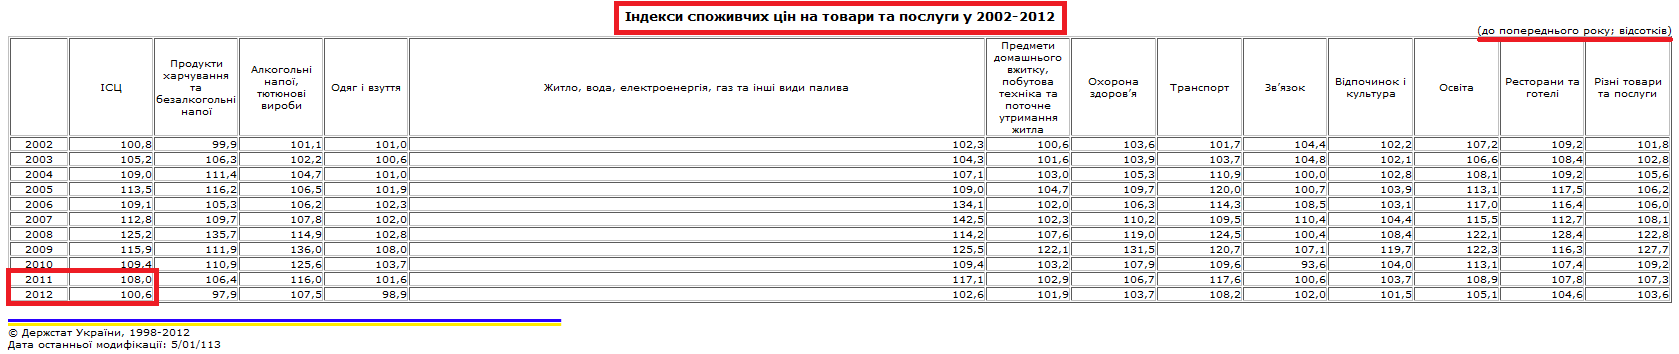 http://www.ukrstat.gov.ua/operativ/operativ2008/ct/cn_rik/icsR/iscR_u/isc_tp_rik_u.htm